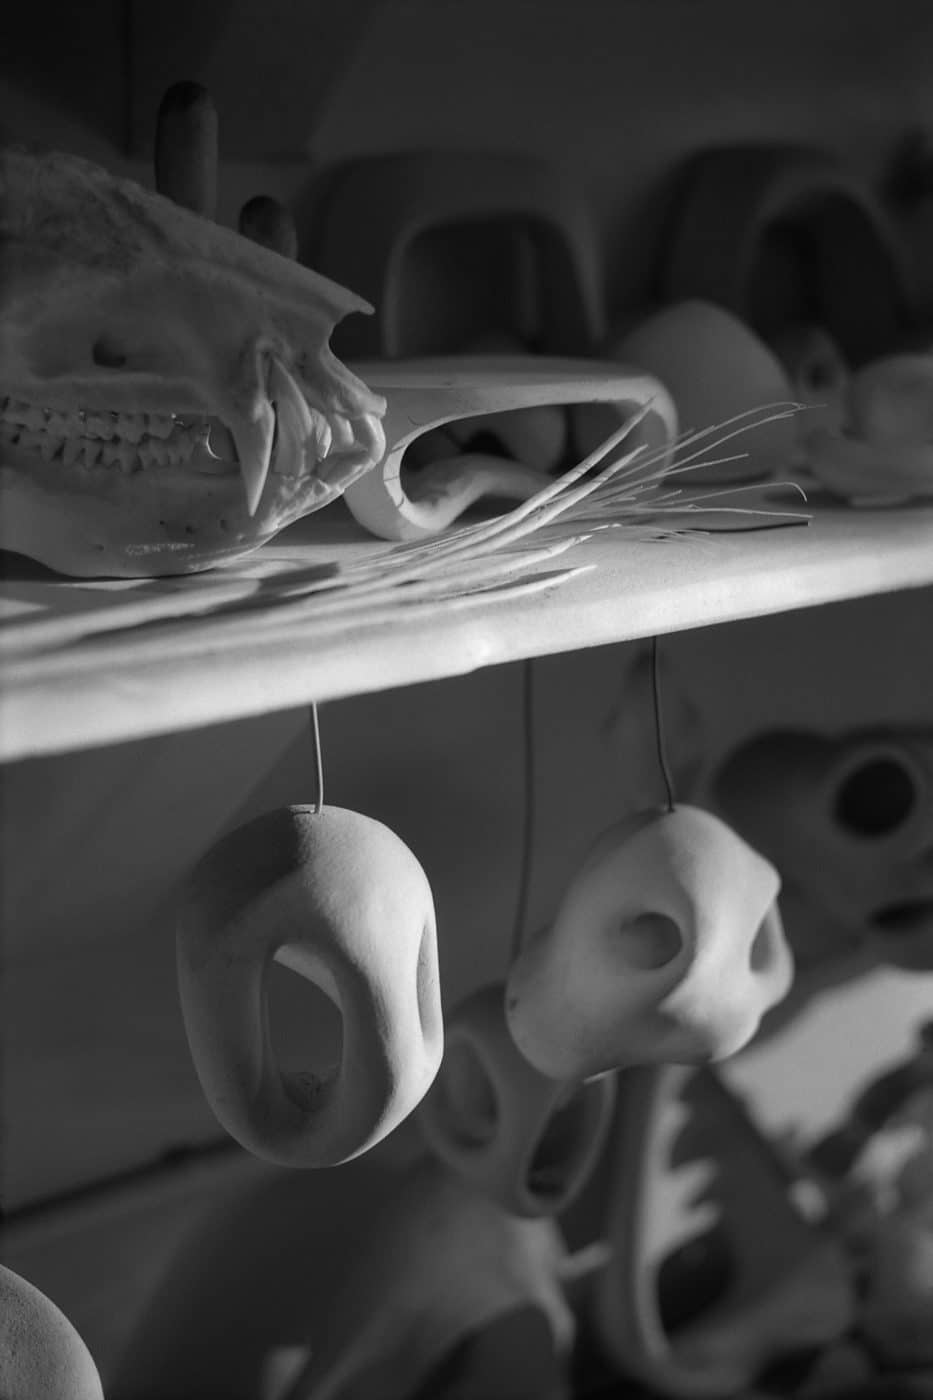 Shelves in Rogan Gregory's workshop holding animal skulls and small sculptures